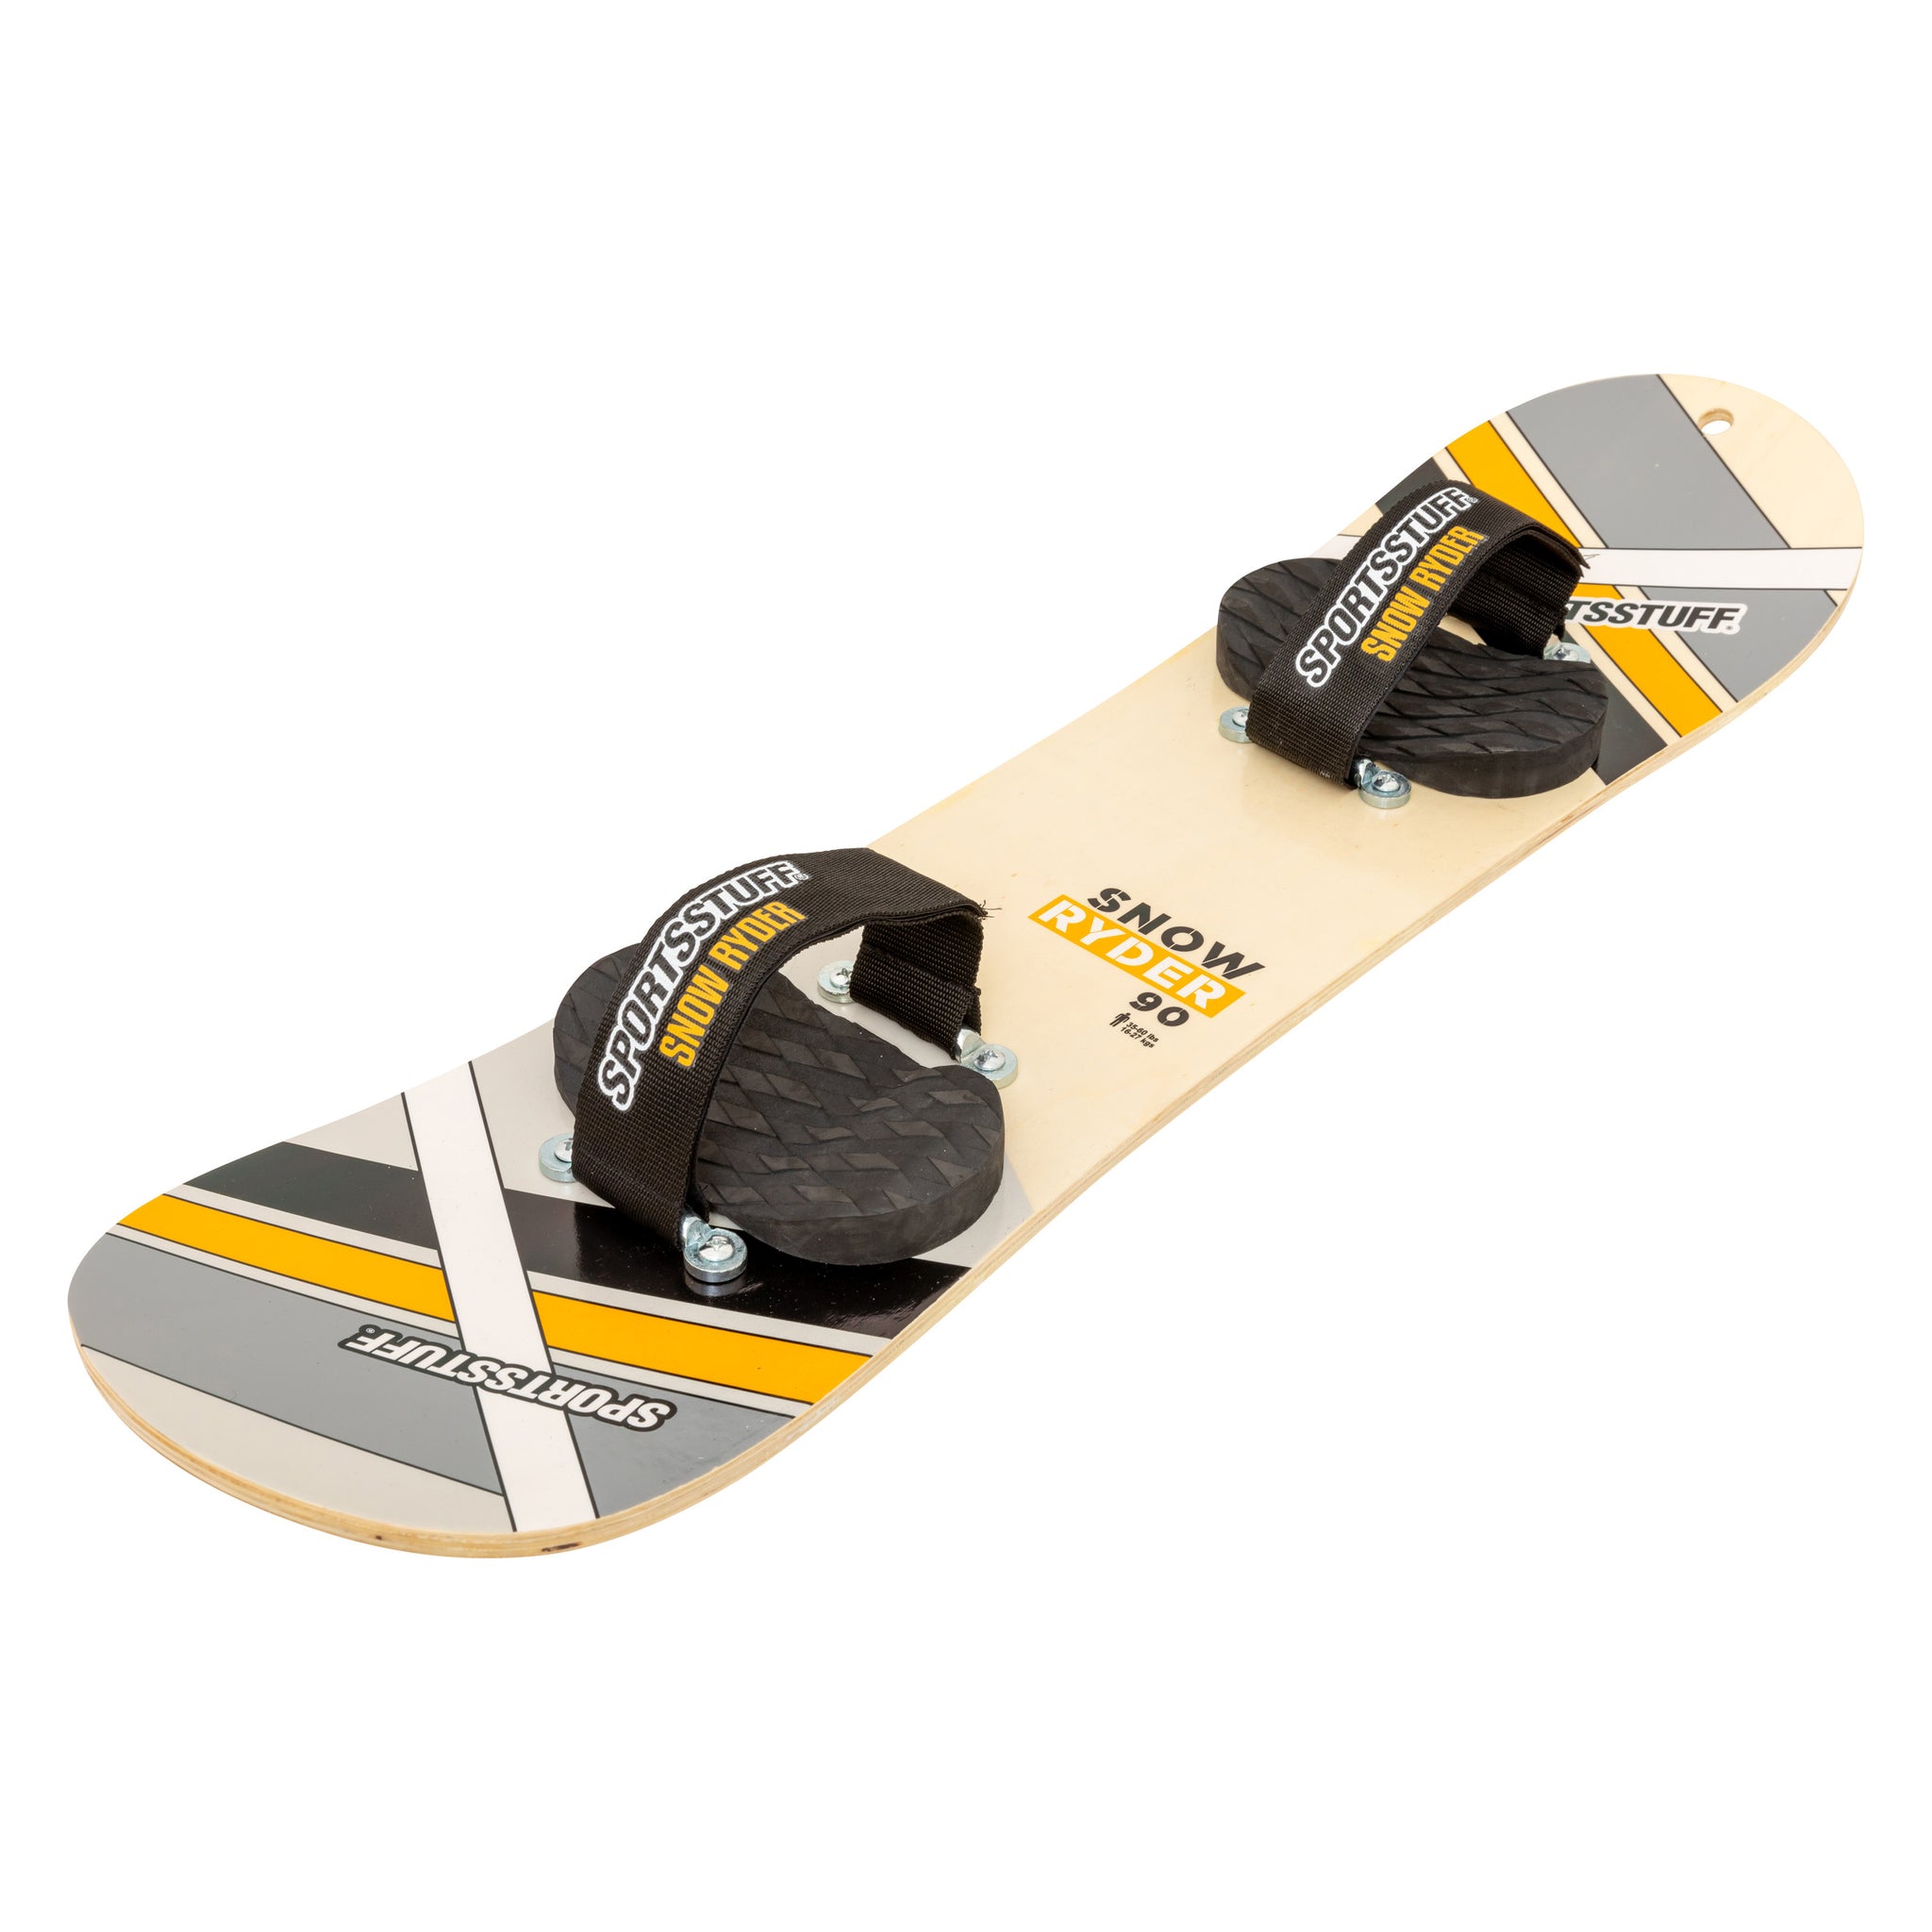 Airhead Snow Ryder Snowboard - 90 cm, 110 cm, 130 cm